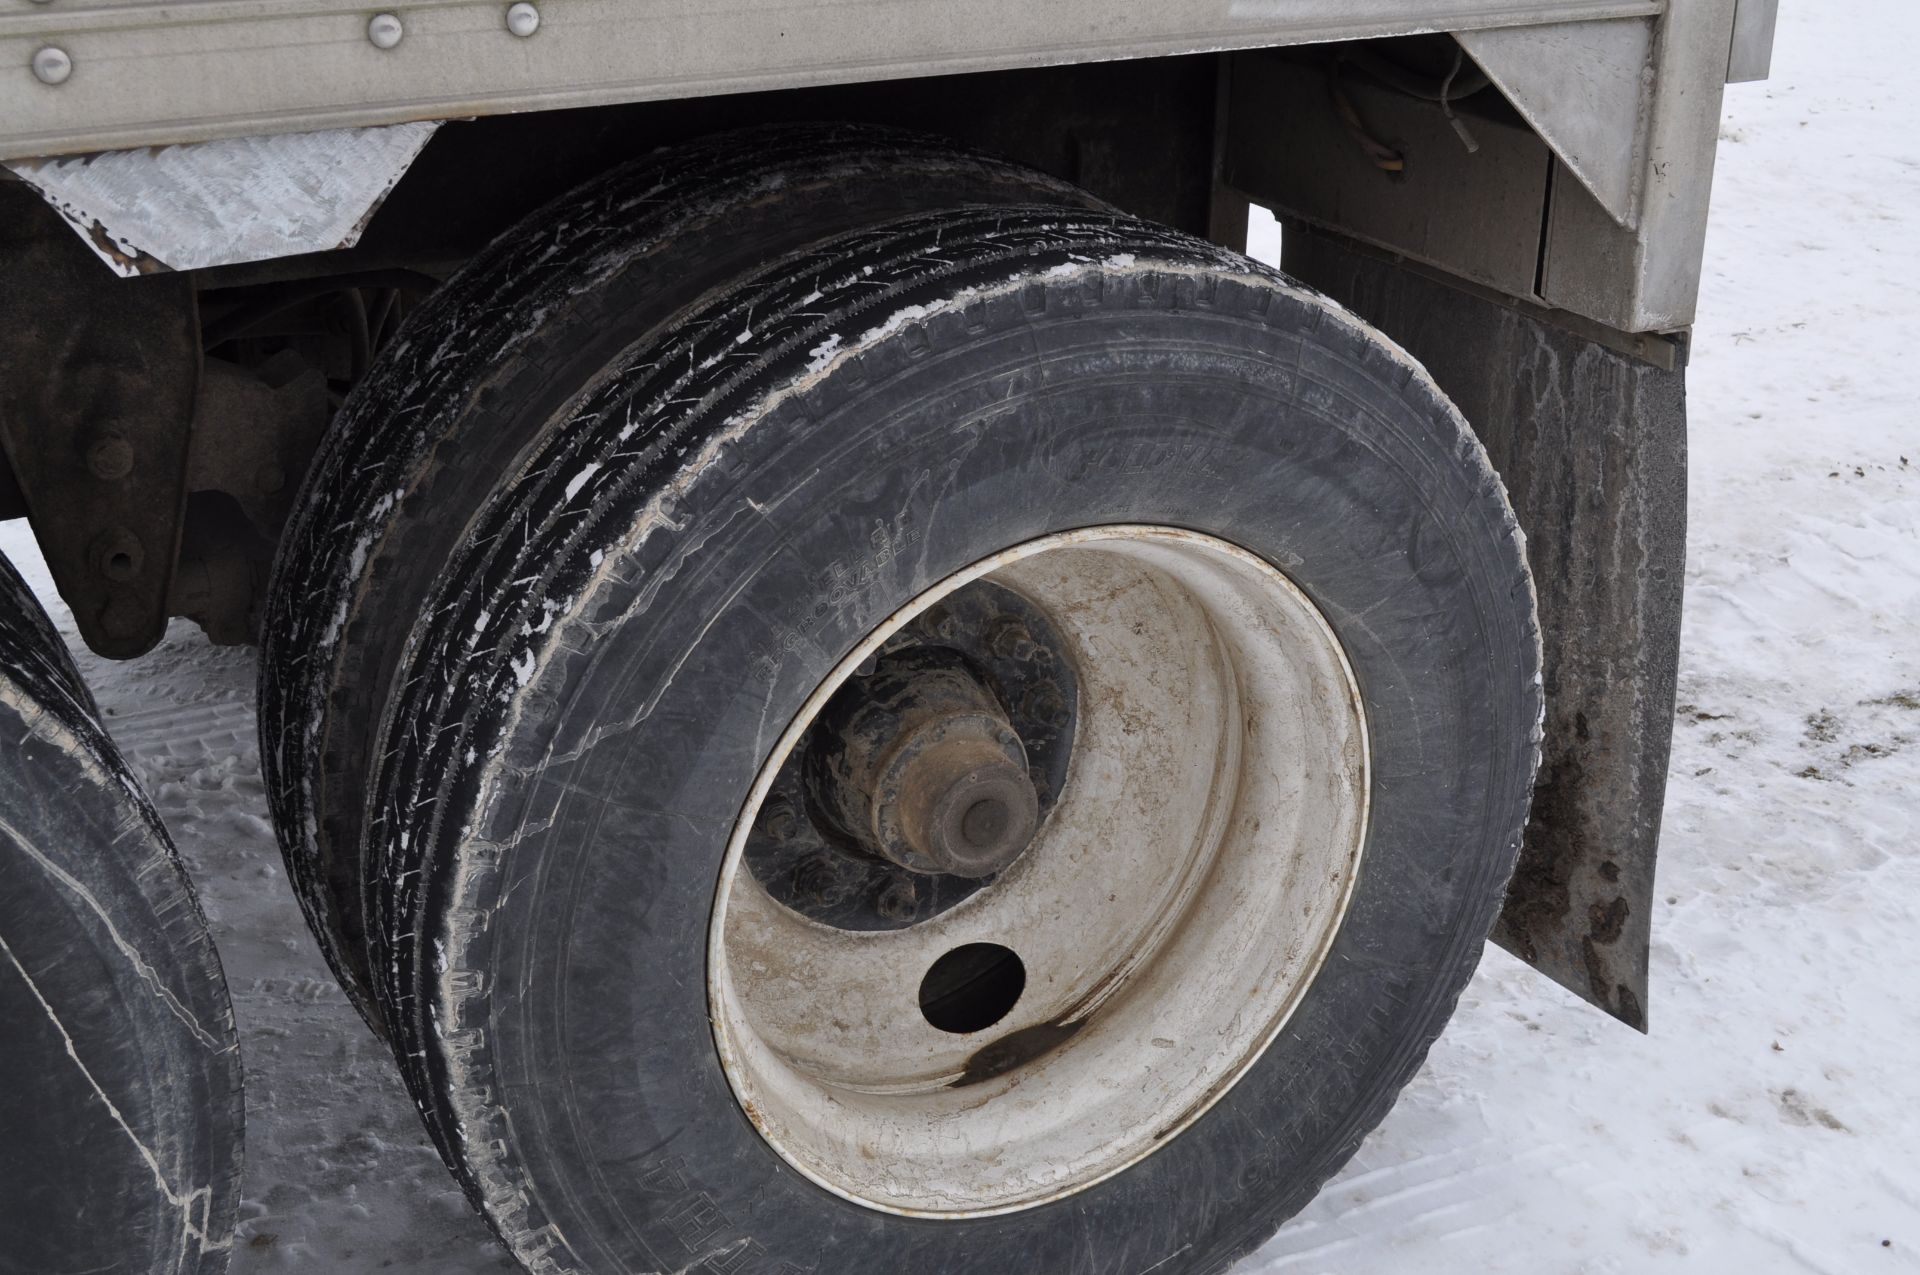 1993 42’ Timpte hopper bottom trailer, spring ride, 11R24.5 tires, roll tarp, VIN H42221PB084815 - Image 12 of 19